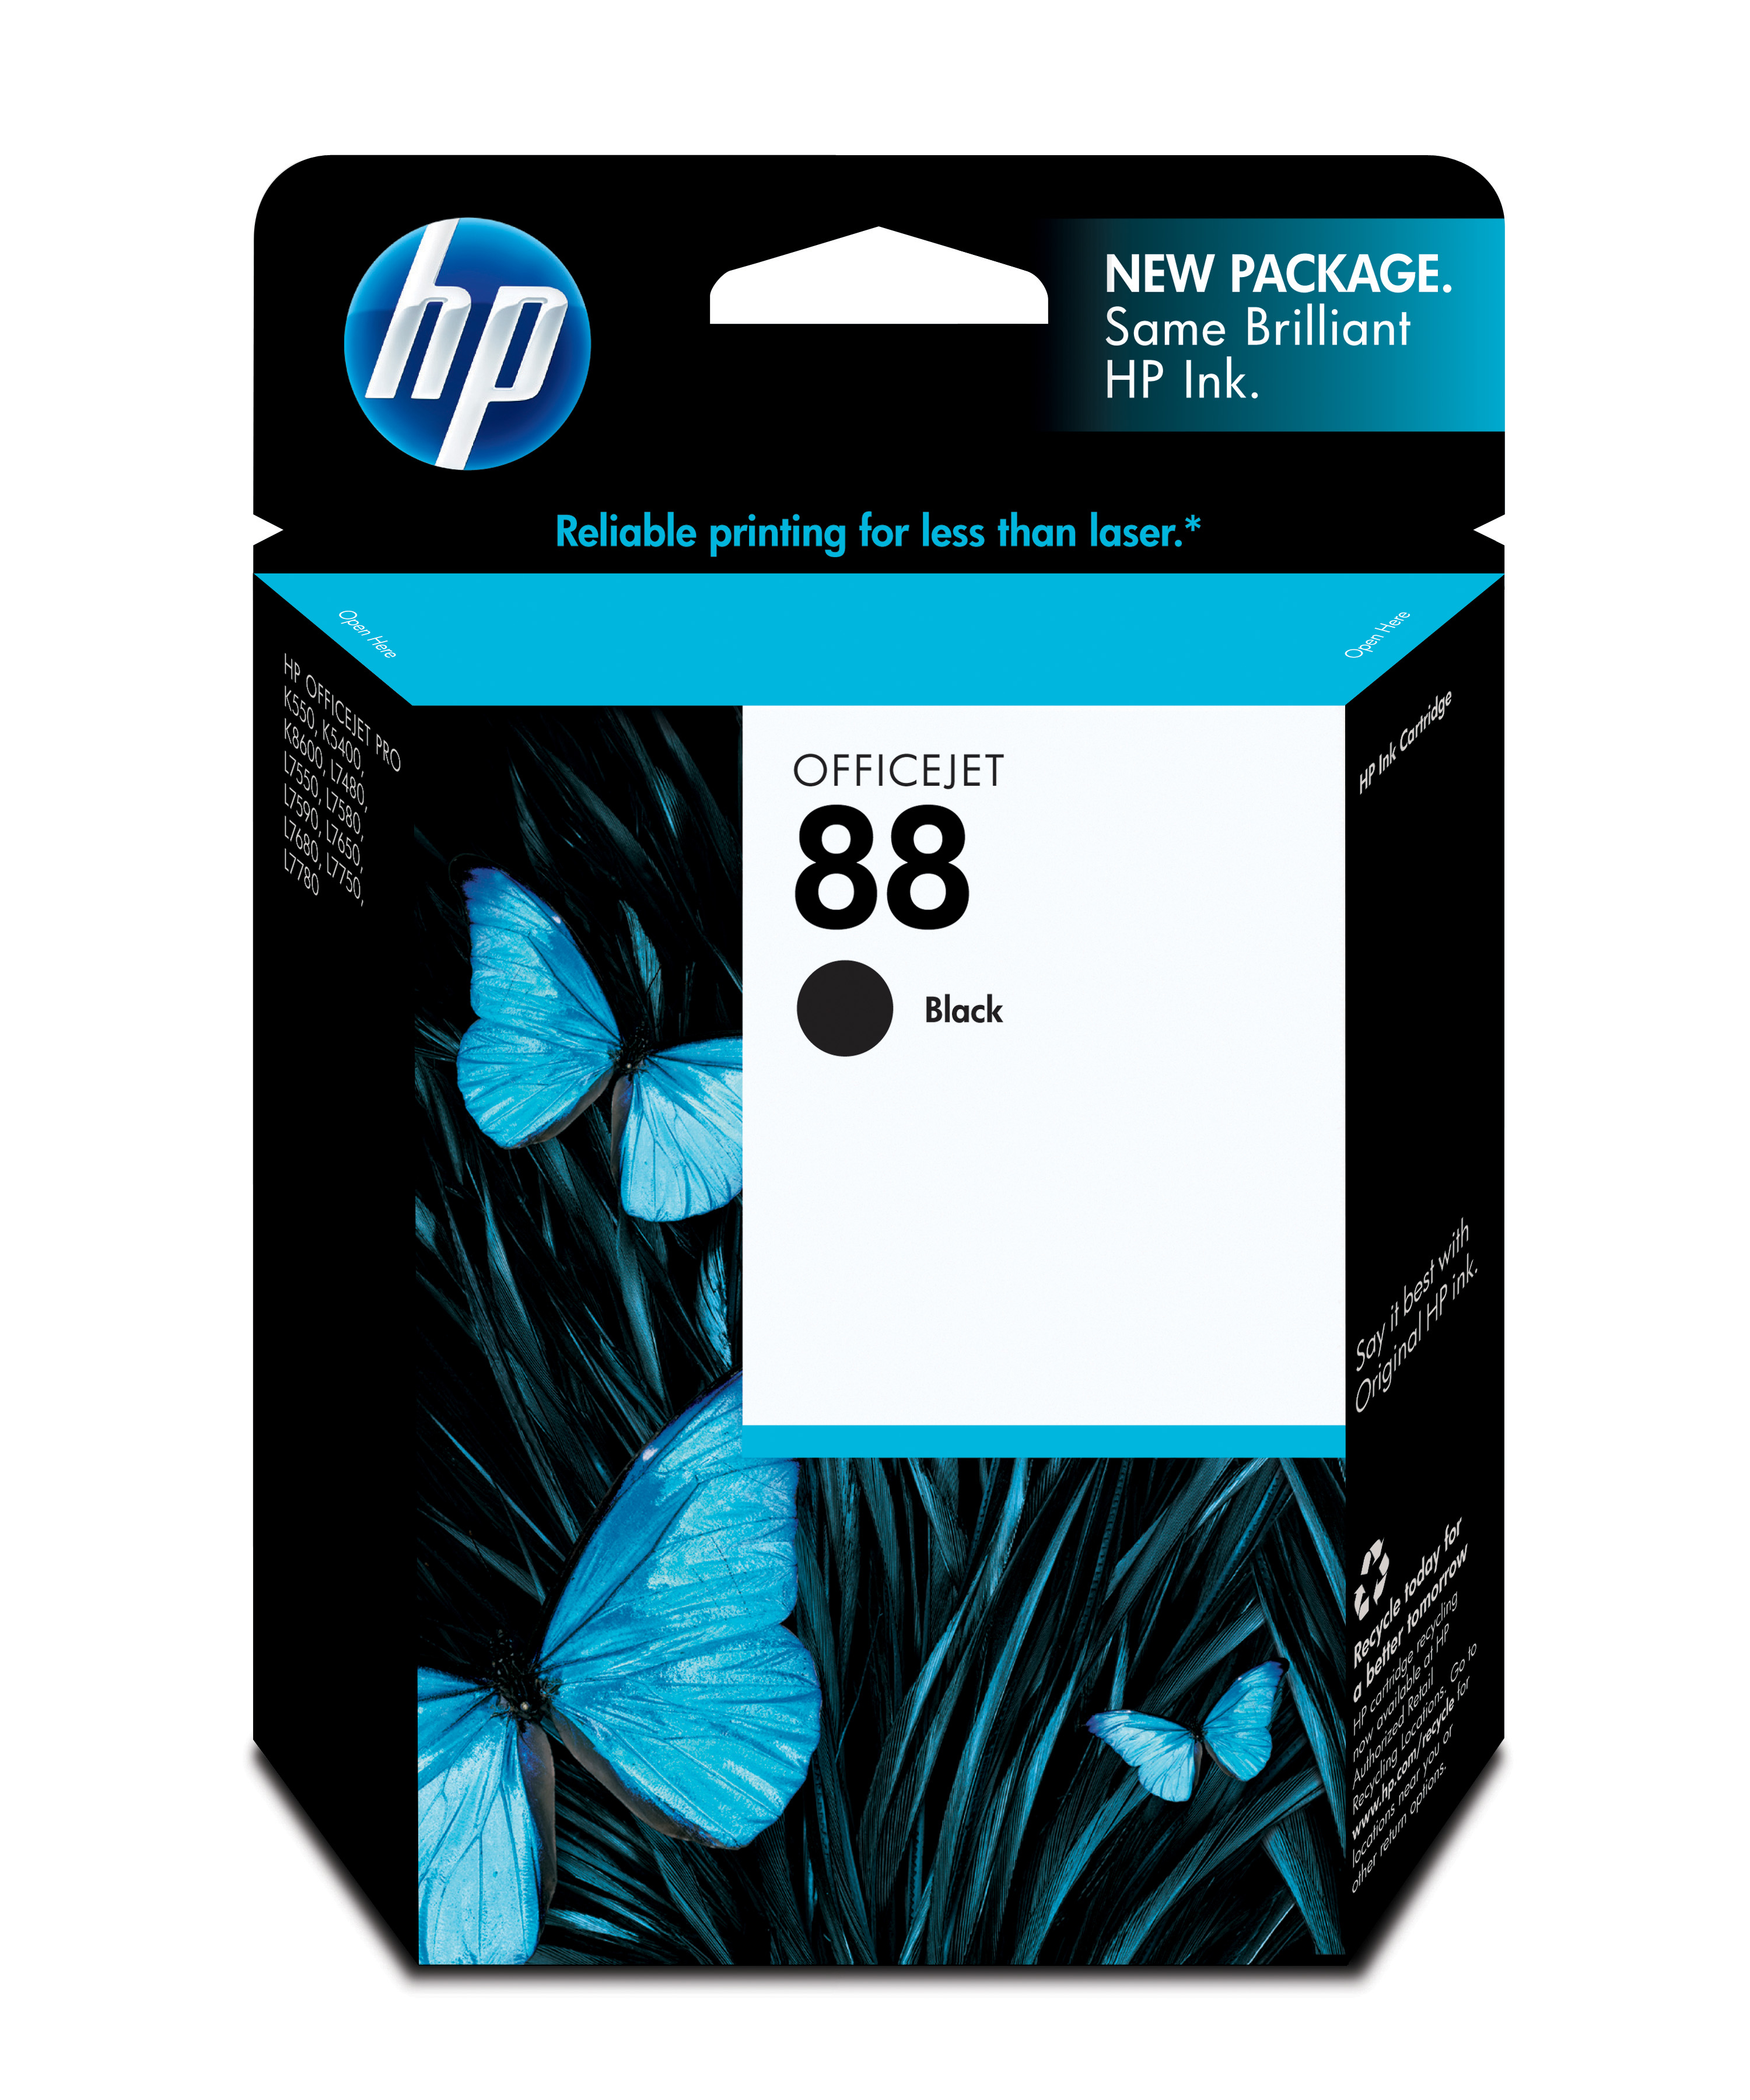 HP 88 Black Officejet Ink Cartridge Genuine HP Inkjet